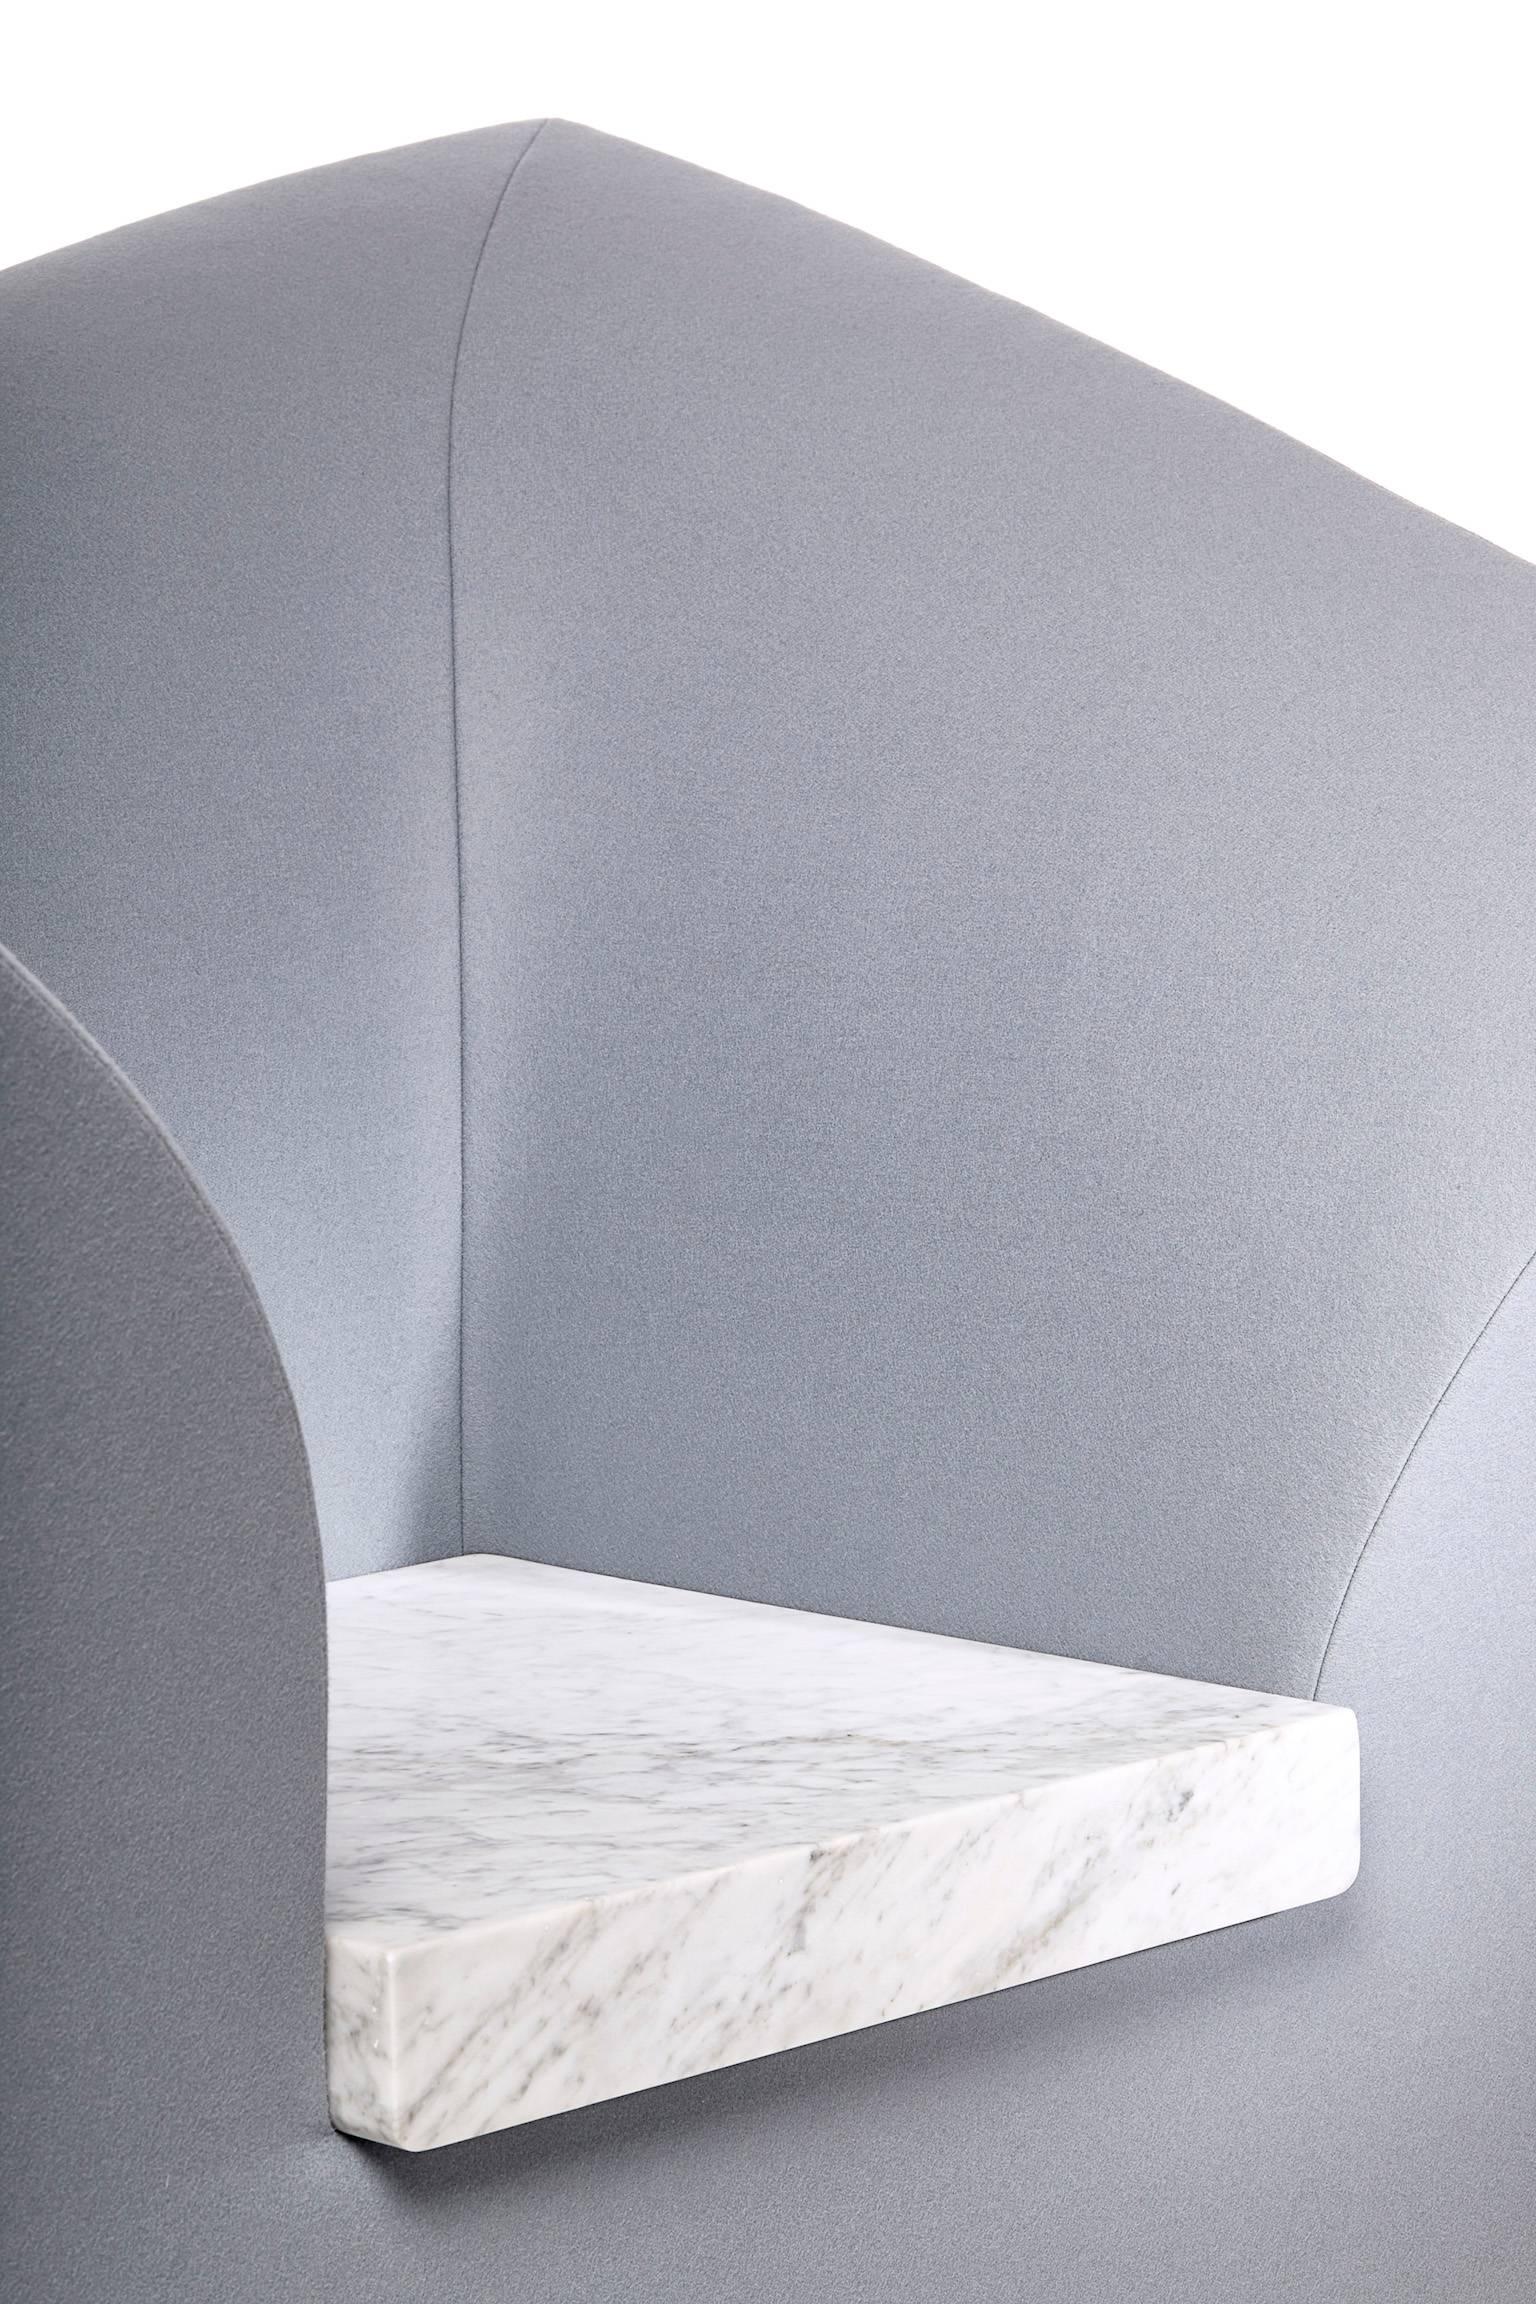 Molded Moooi Compression Sofa with Carrara Marble Seat For Sale